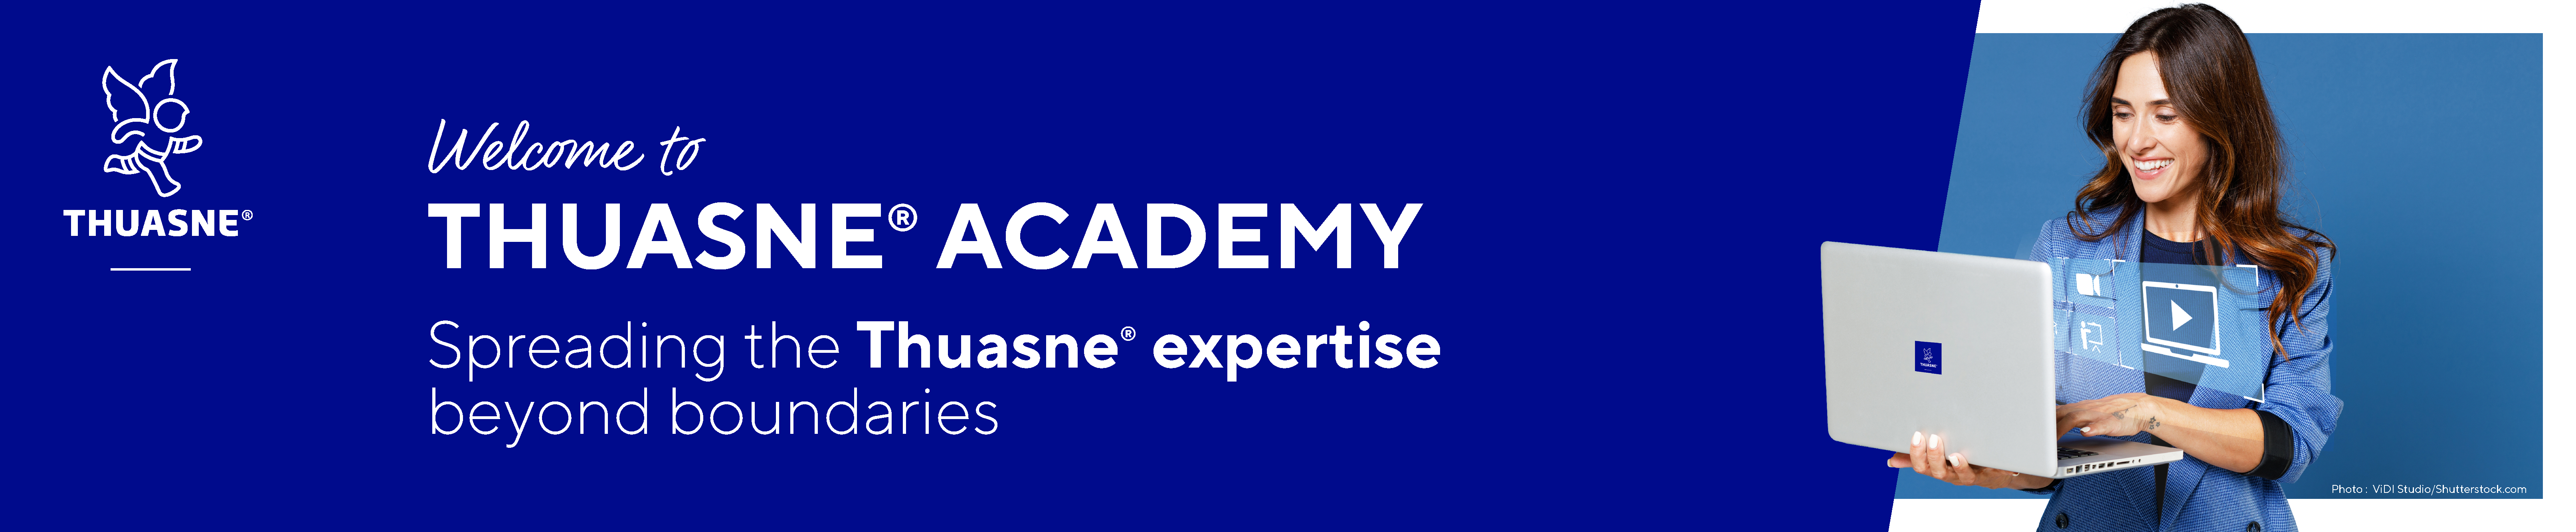 Thuasne Academy Banner